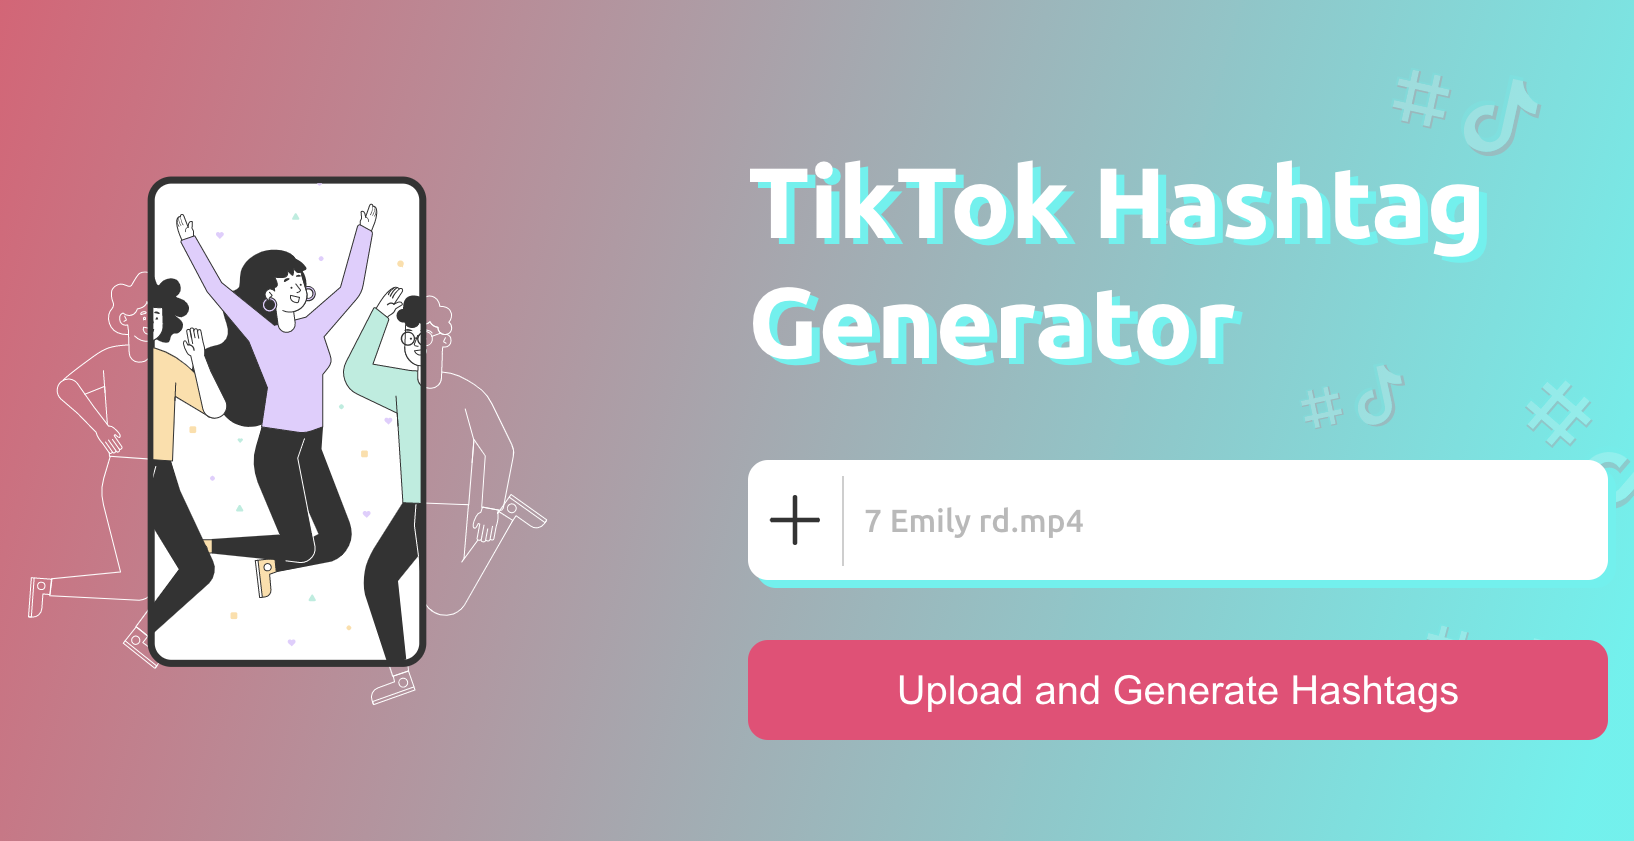 TikTok hashtag generator